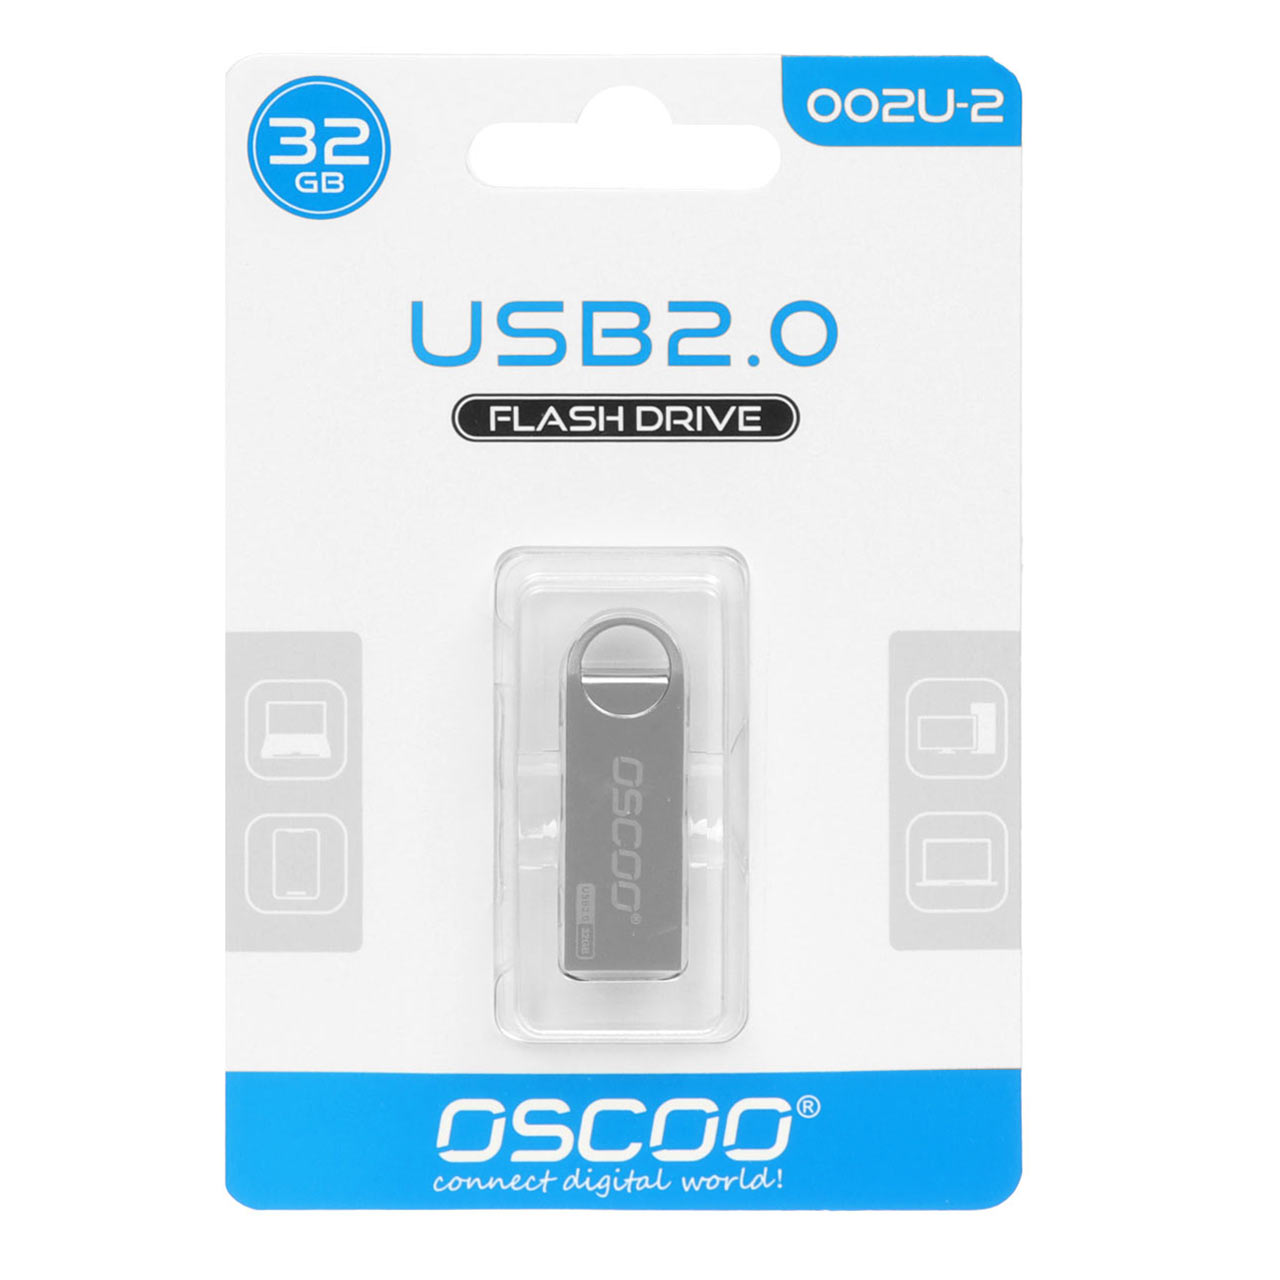 OSCOO 002U-2 USB2.0 Flash Memory-32GB نقره ای